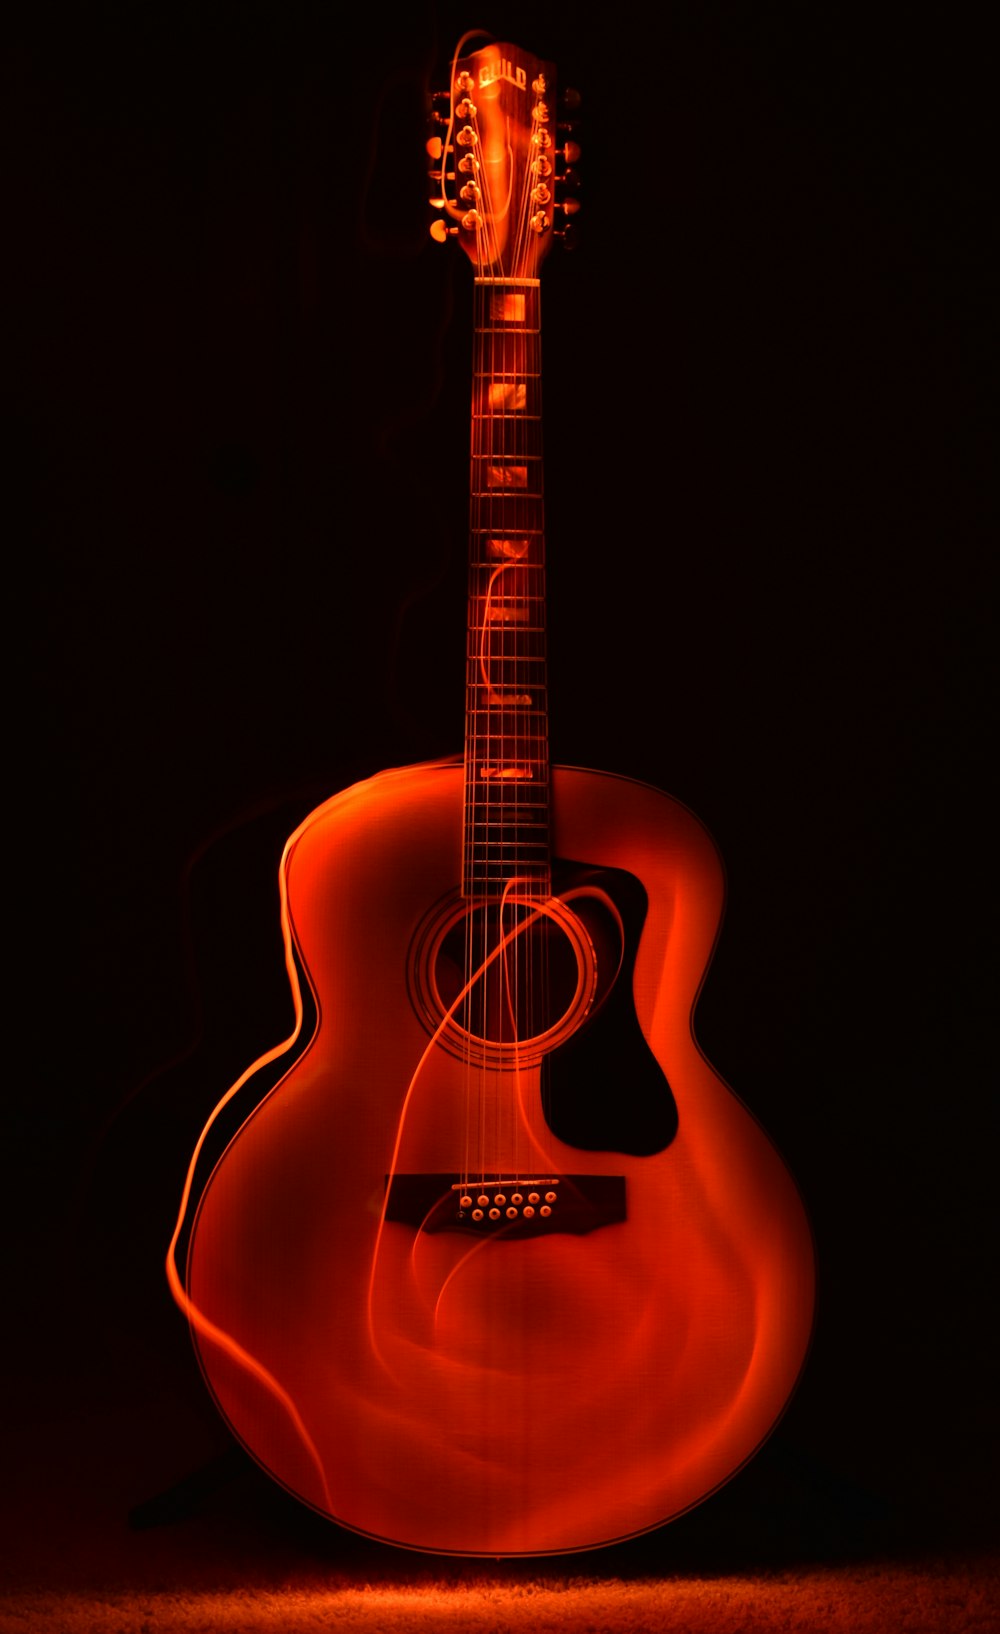 Fond d’écran guitare orange